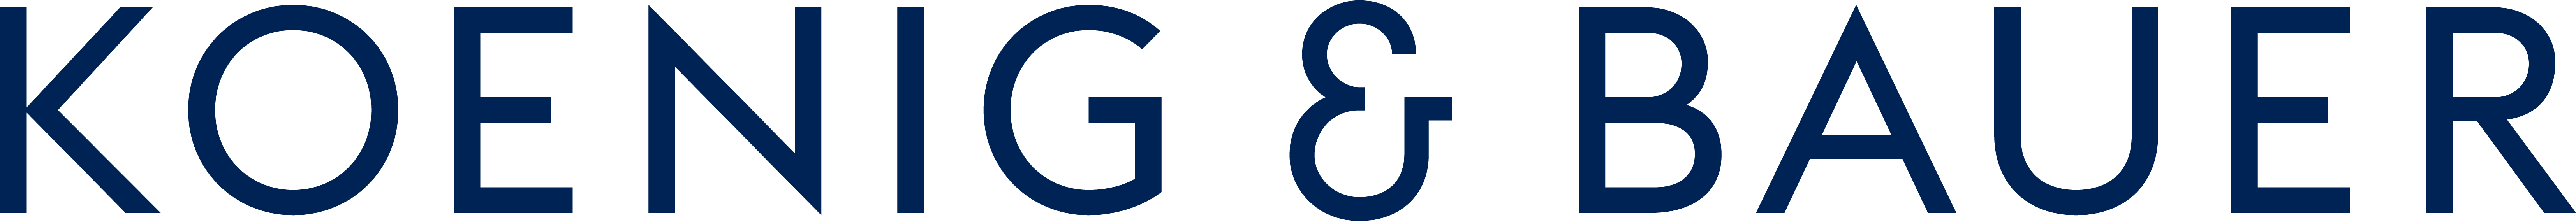 Koenig_Bauer_Logo_P_RGB